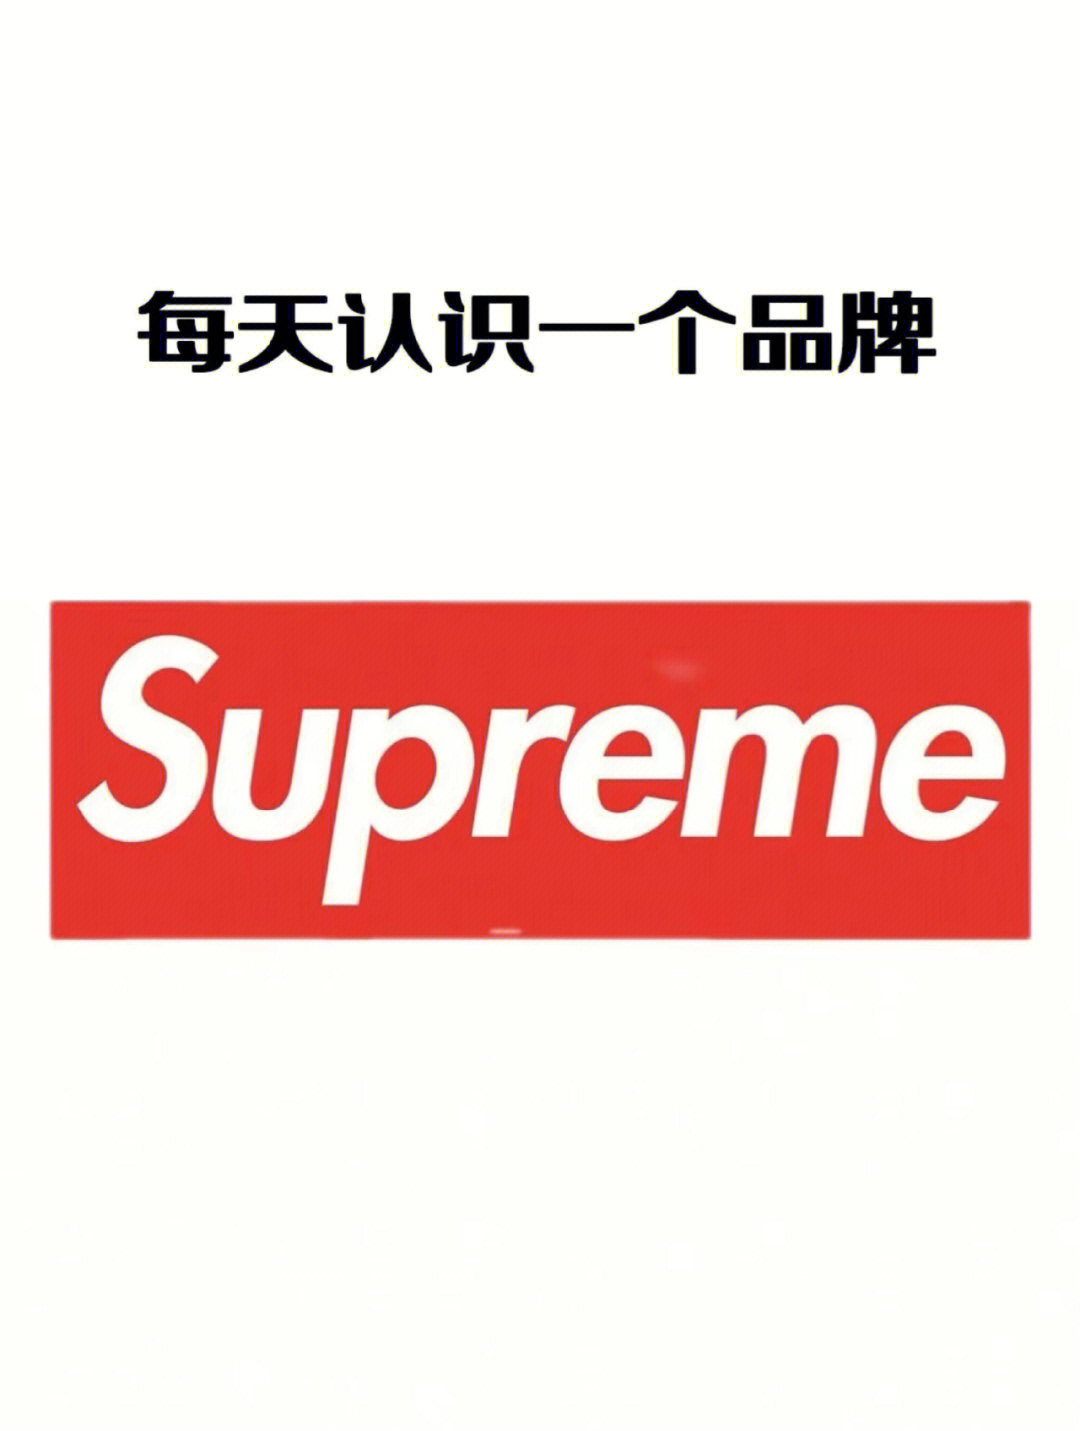 supreme logo黑白图片